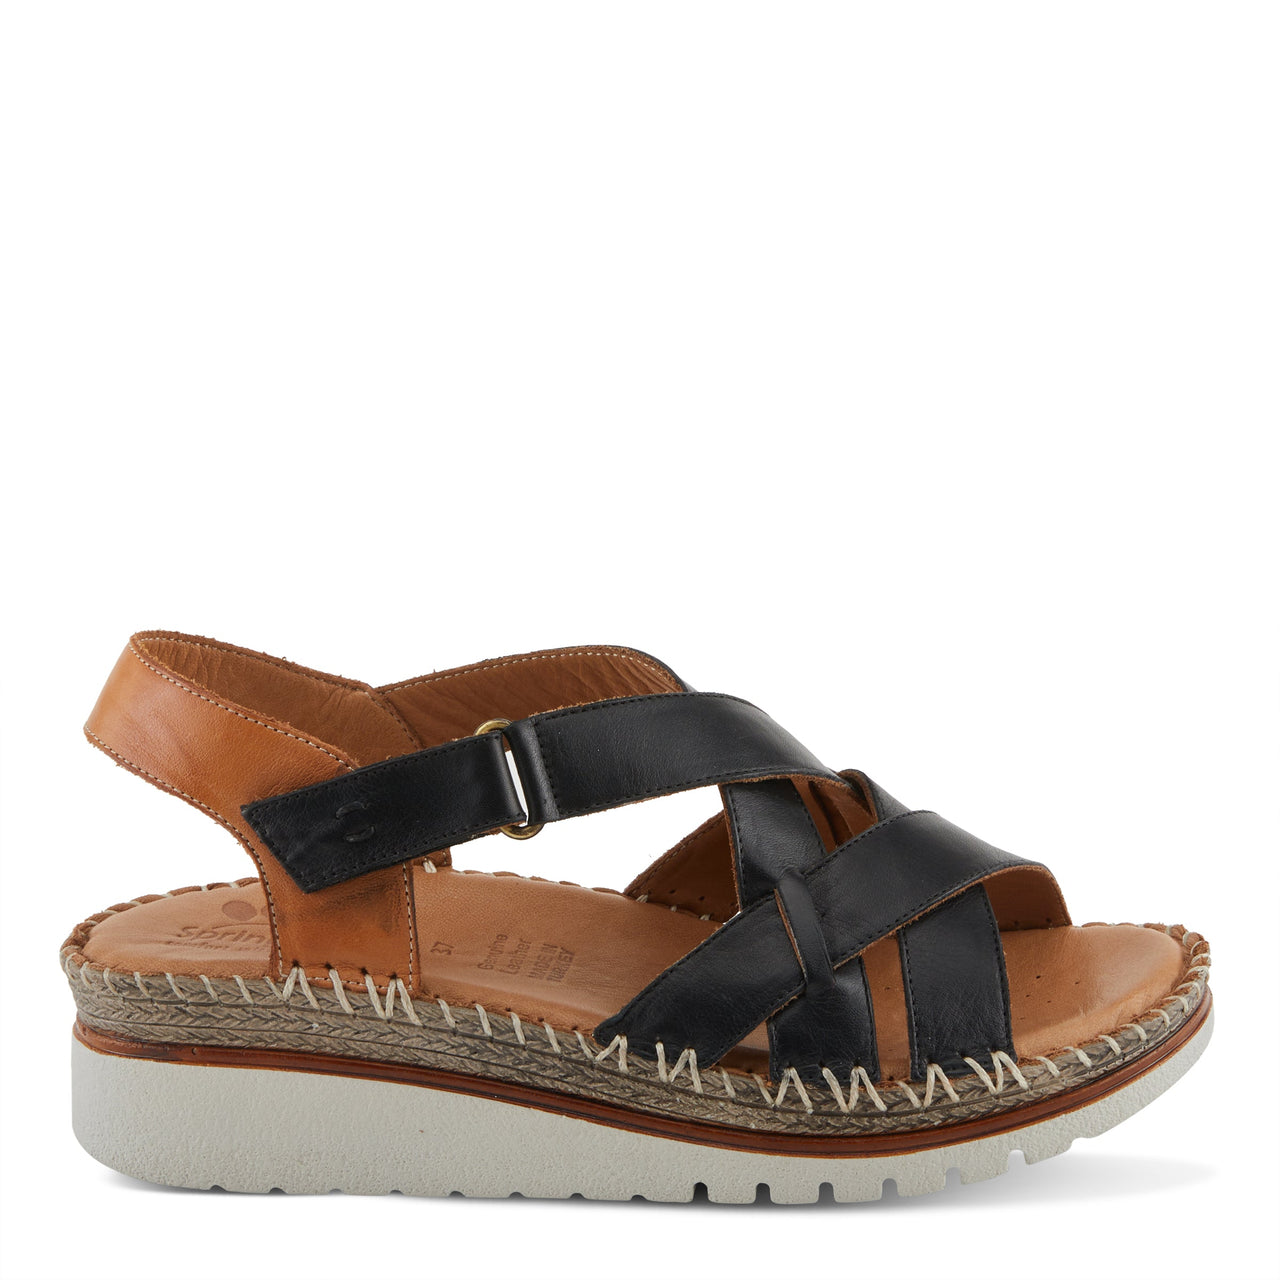 Chic Spring Step Migula Sandals featuring embossed pattern and platform wedge heel